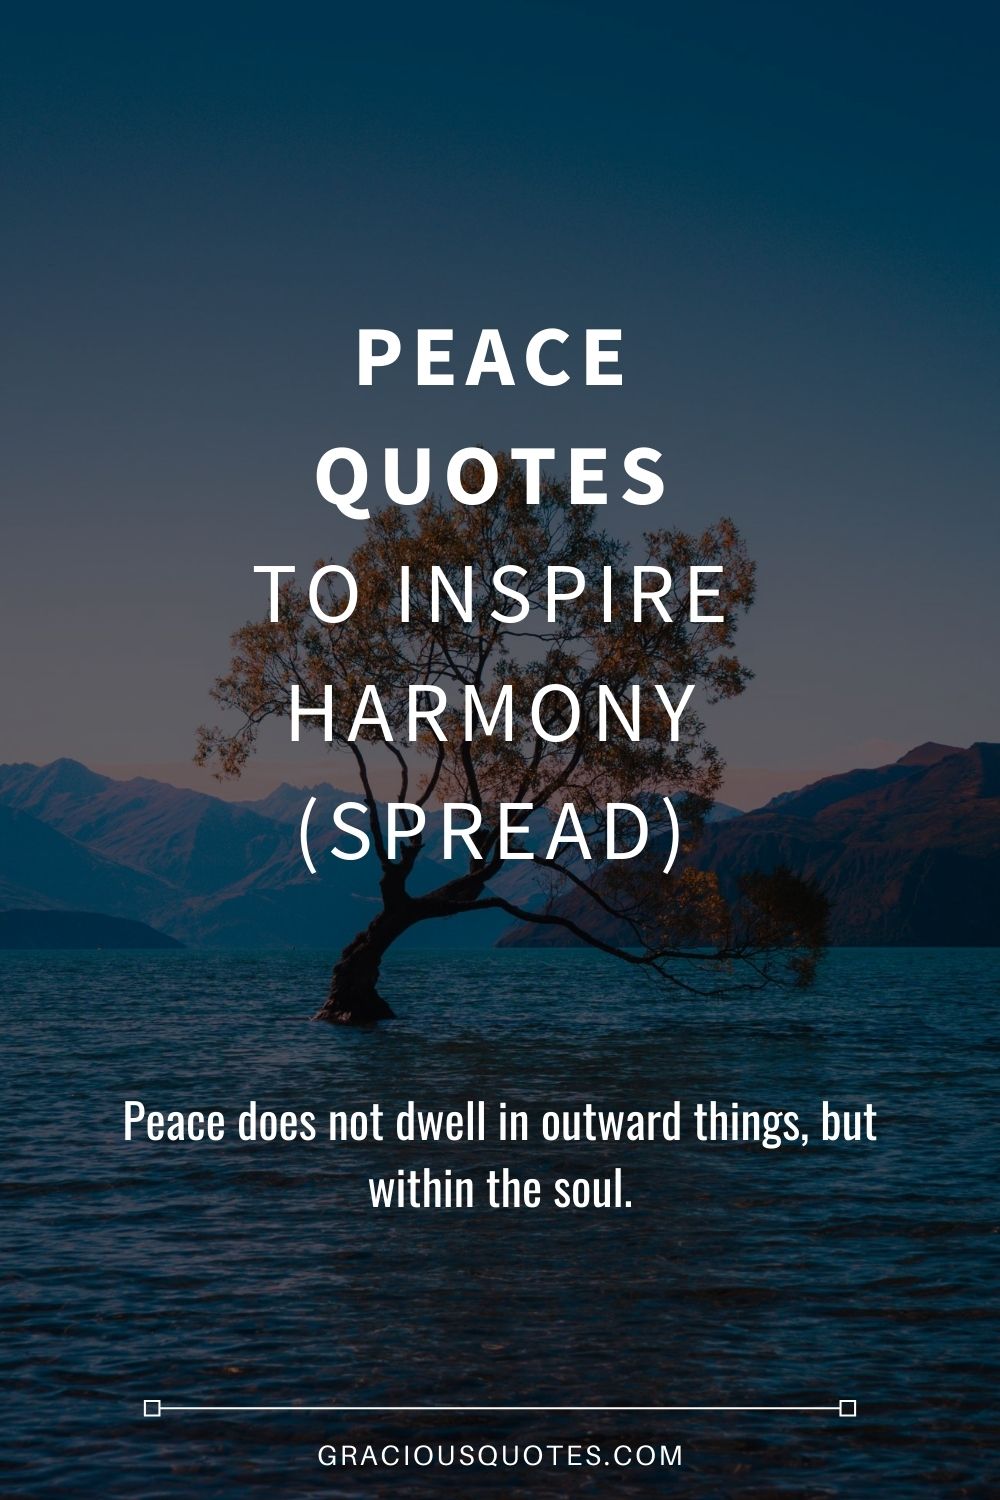 64 Peace Quotes to Inspire Harmony (SPREAD)